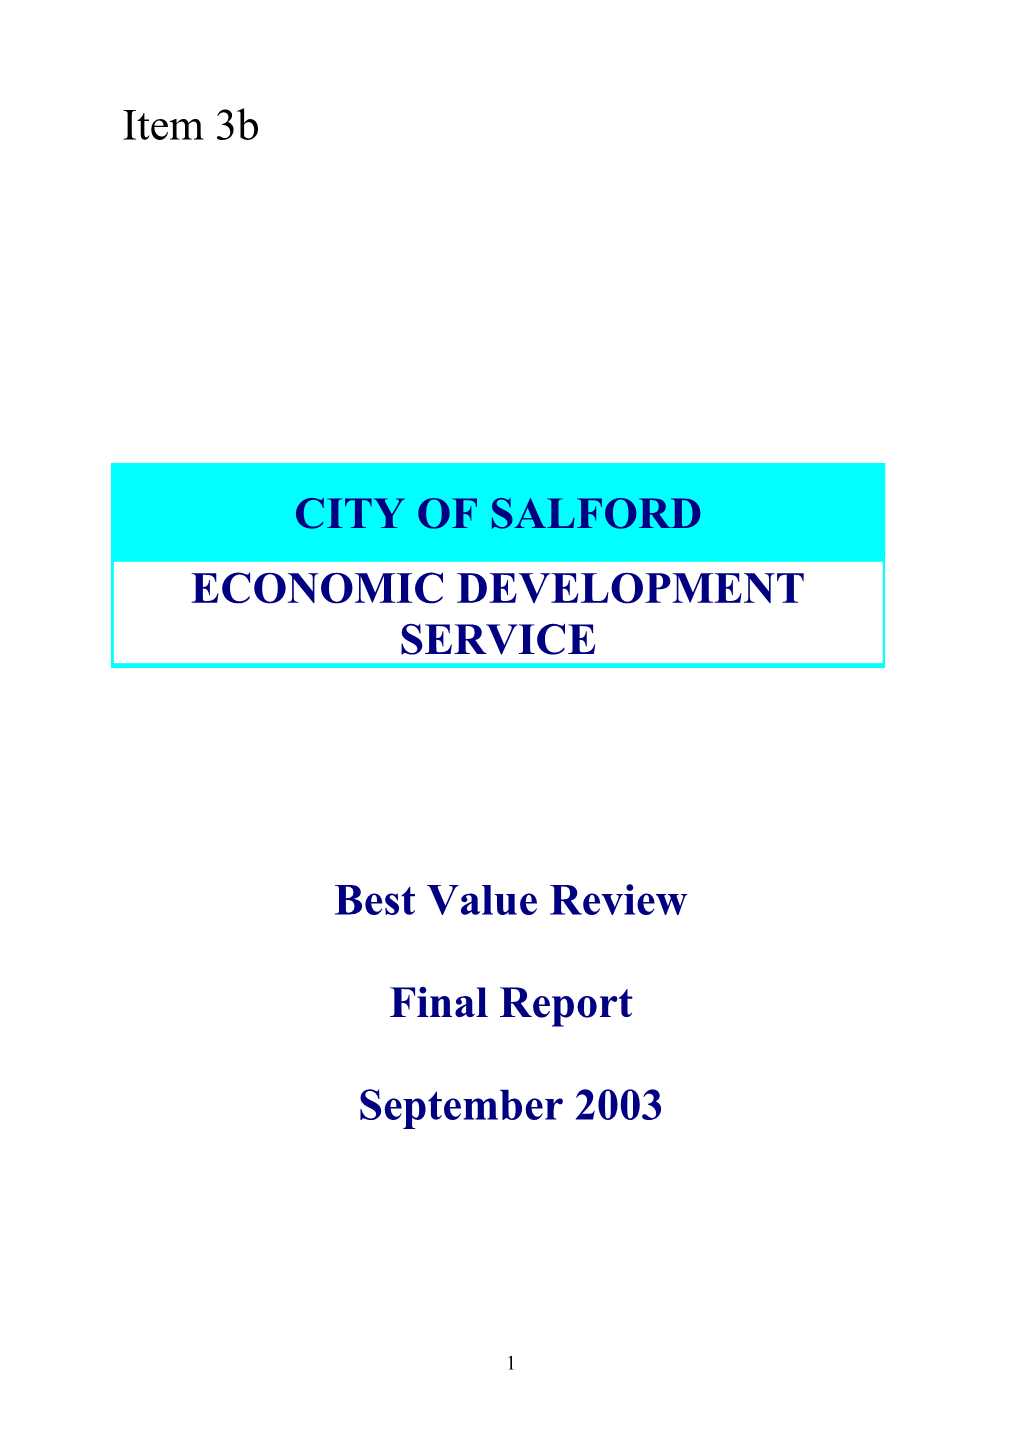 Best Value Final Report